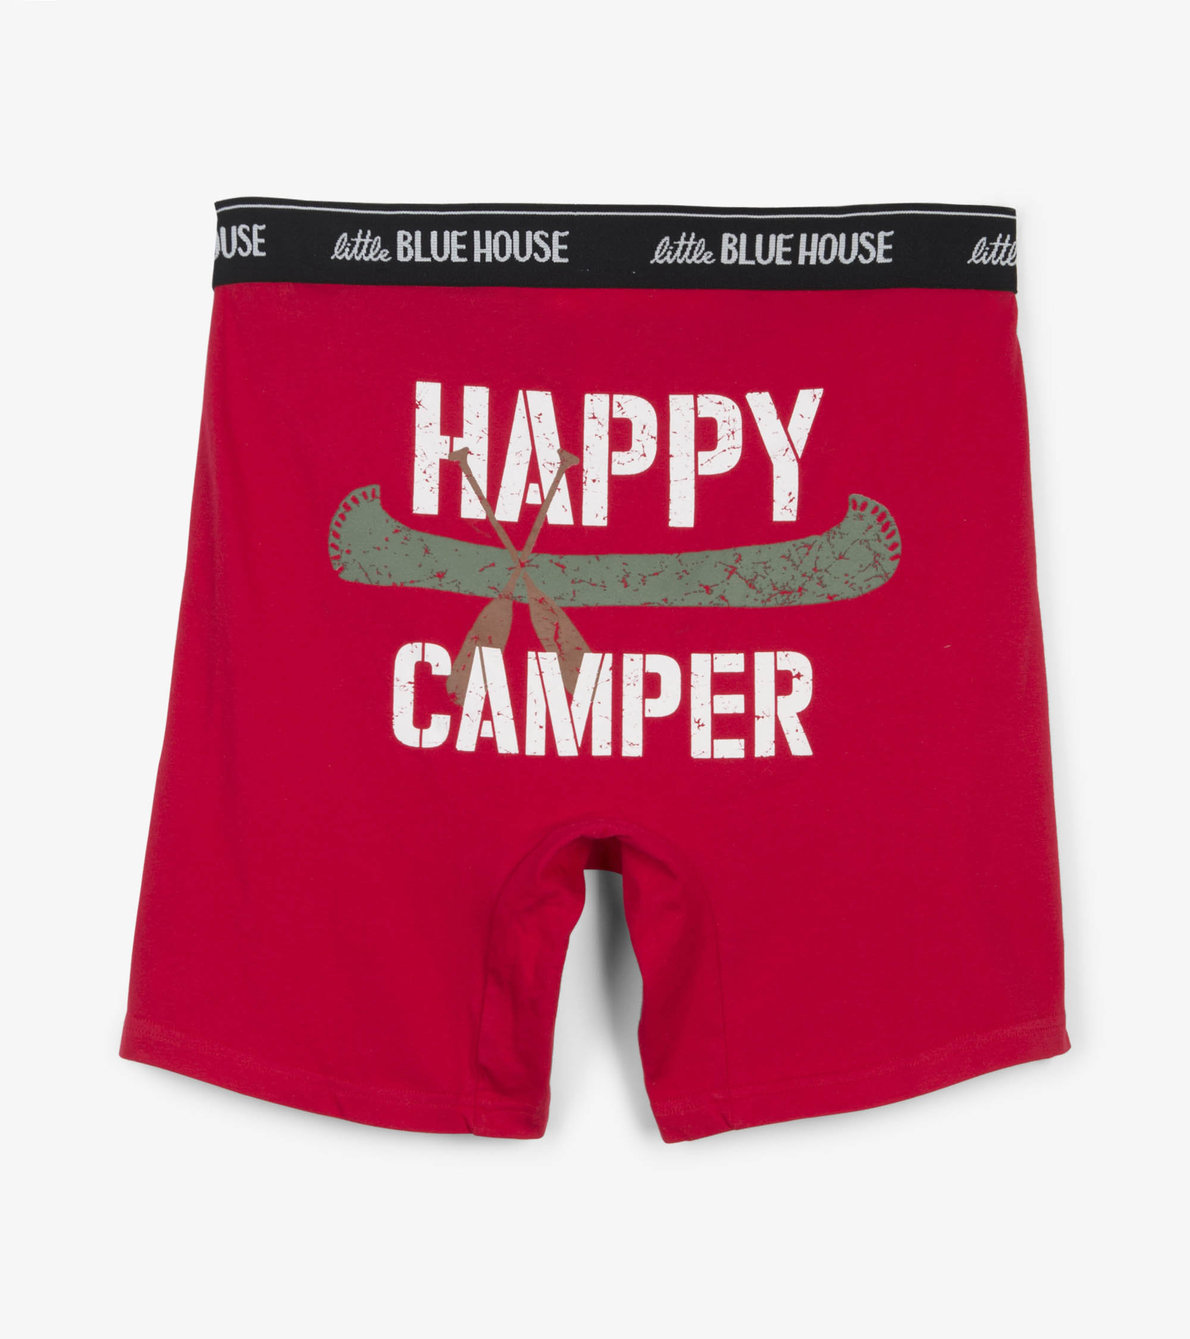 View larger image of Happy Camper Men's Boxer Briefs